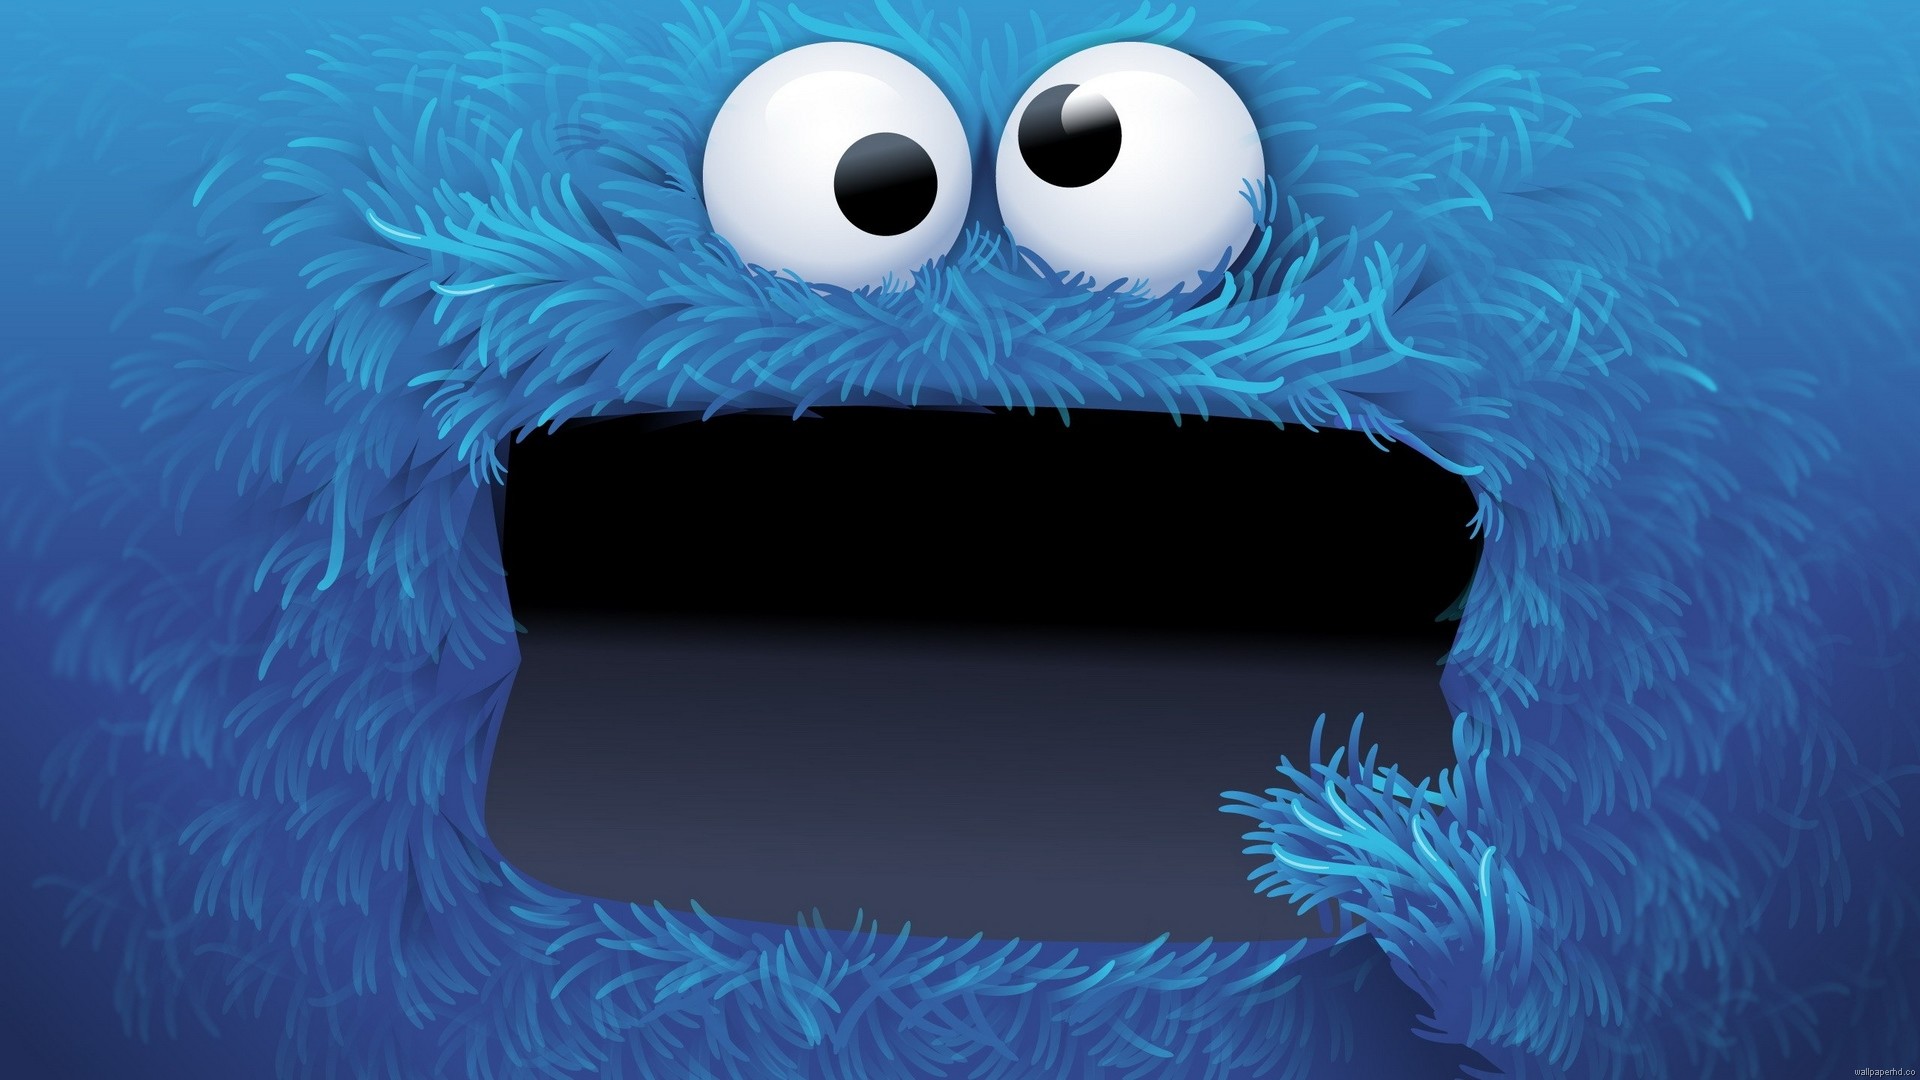 1920x1080 Cookie Monster Desktop Wallpaper yup Adobe on my 'desktop'